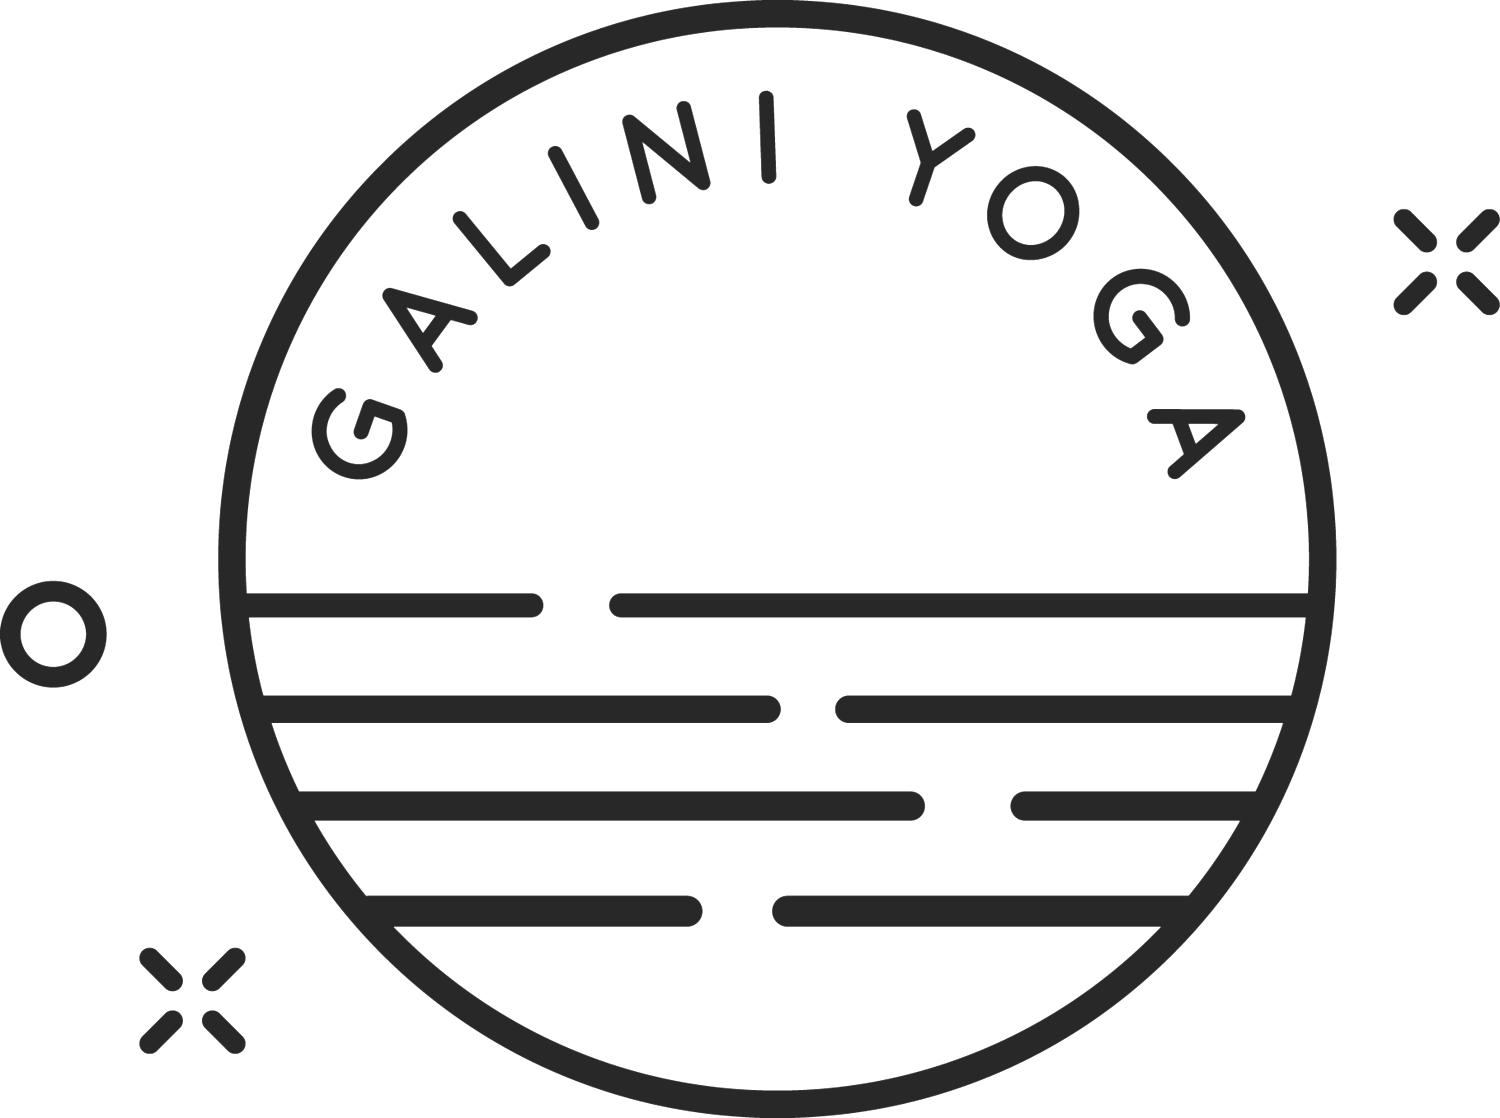 Galini Yoga - Workshops, Trainings & Events in Brussels